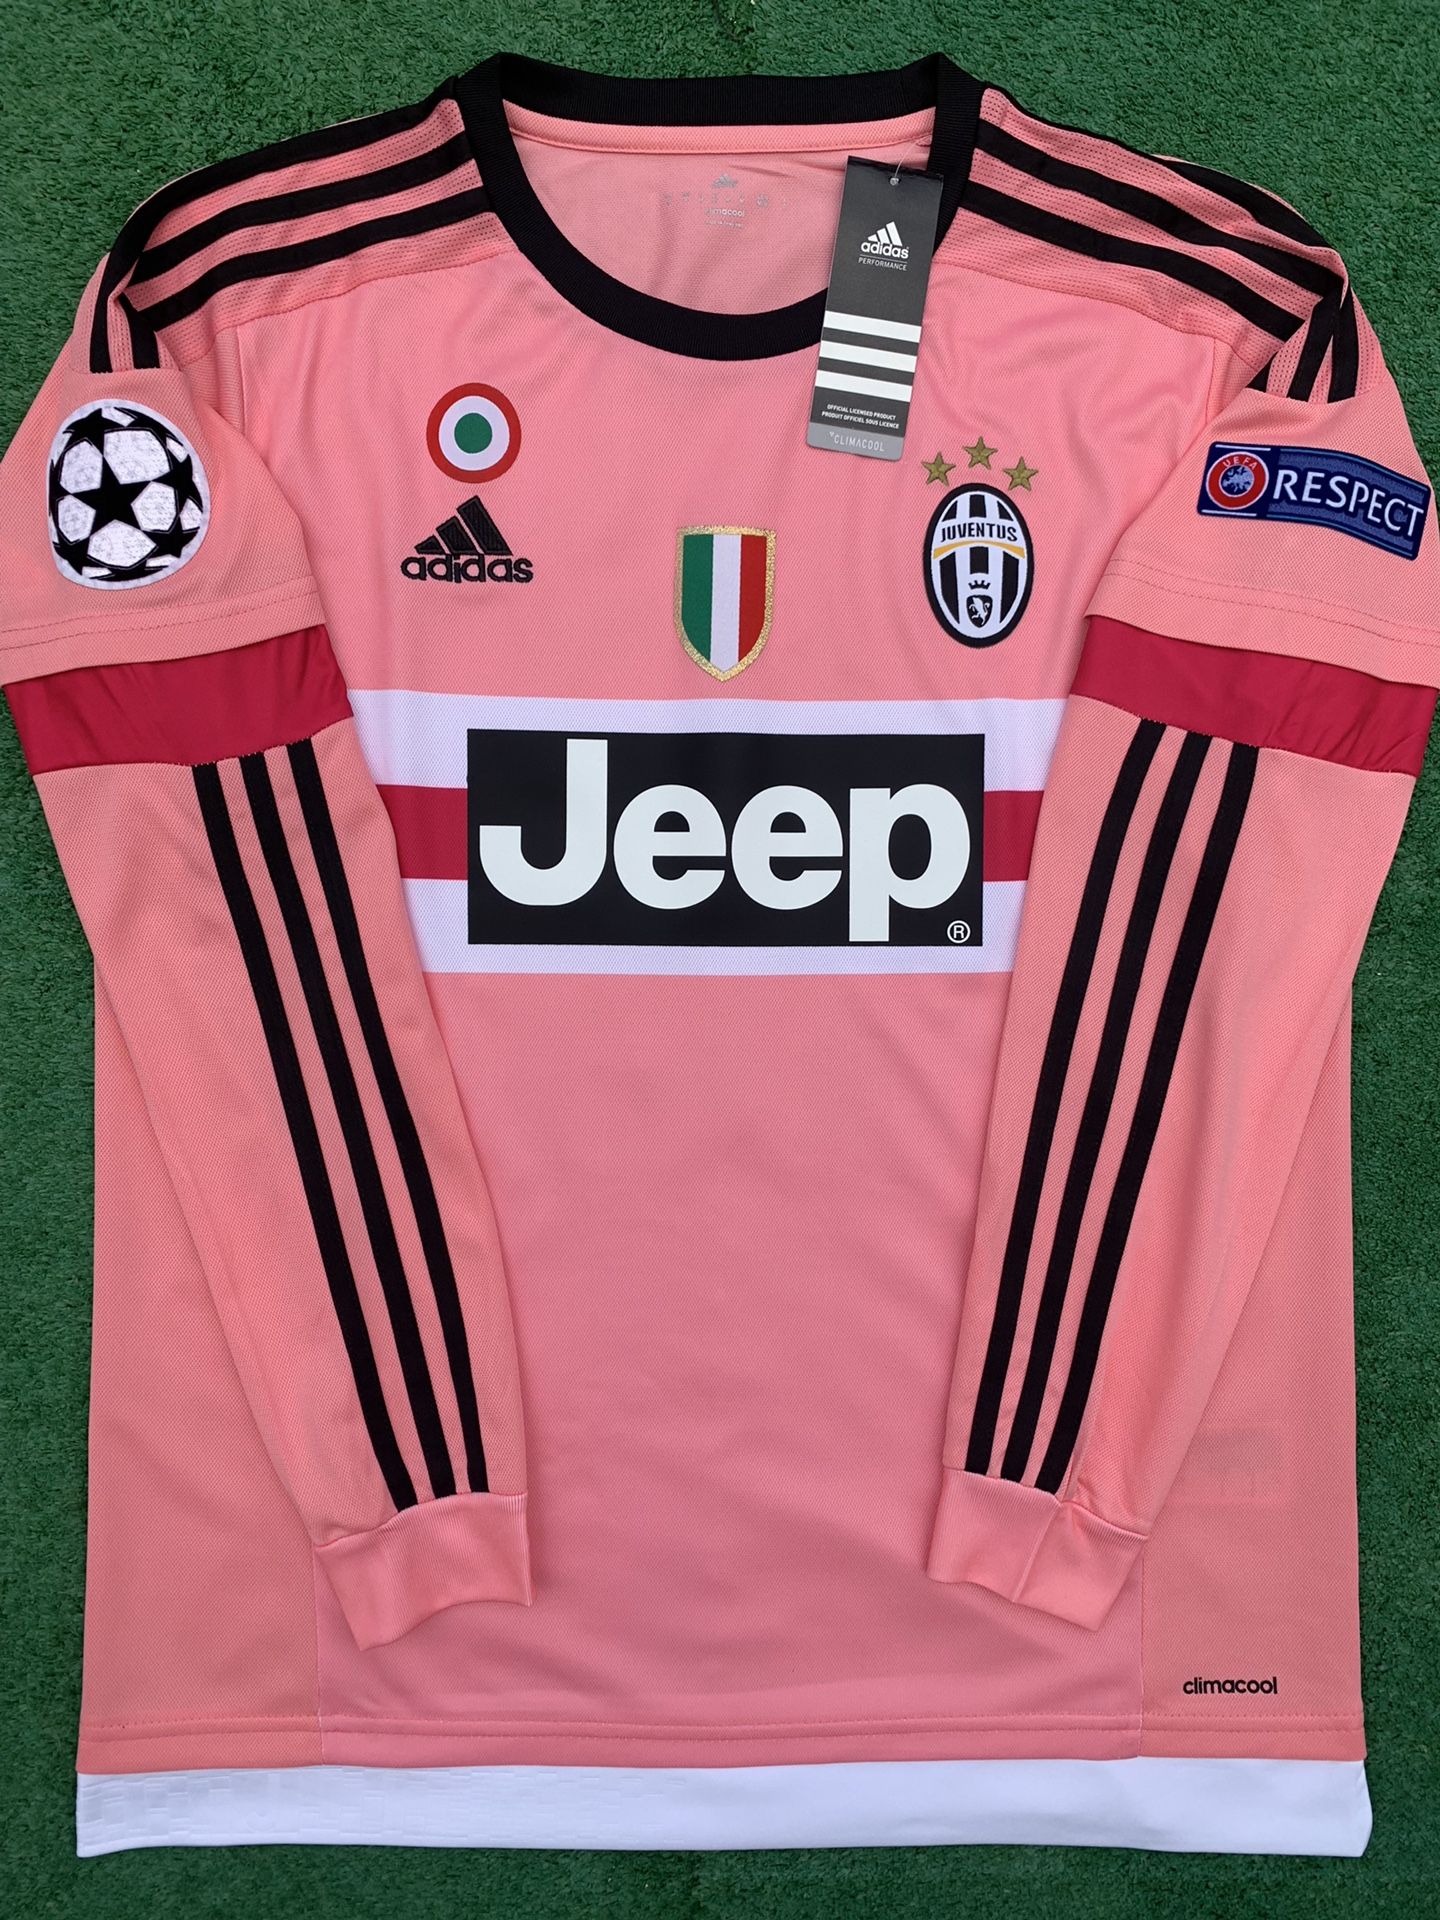 2015/16 Juventus away long sleeve soccer jersey